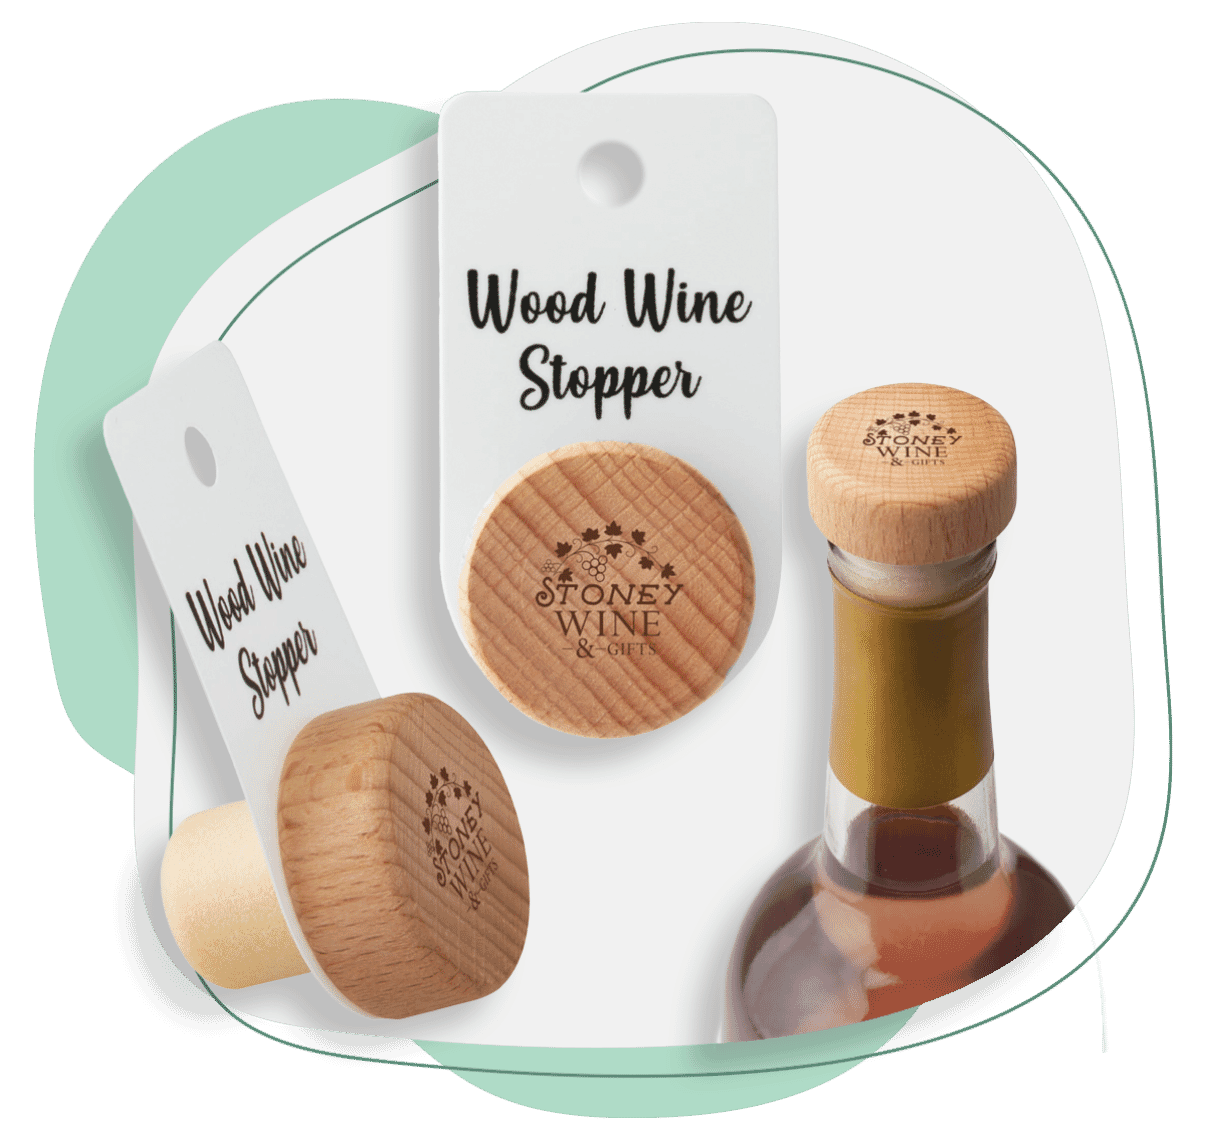 59. Wood Wine Stopper